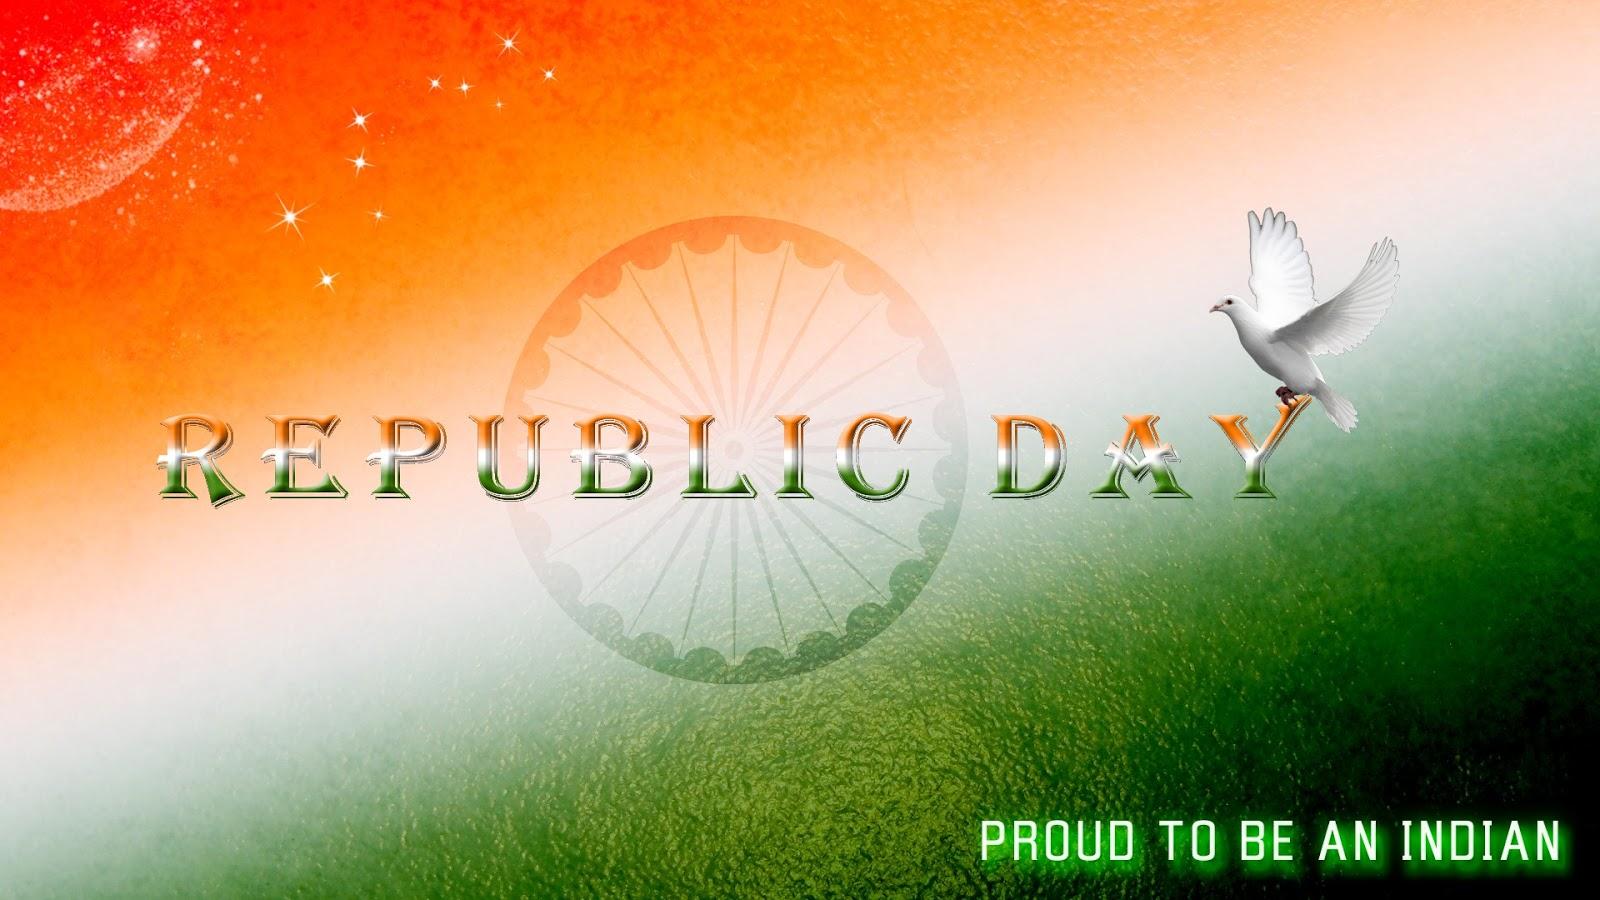 Happy Republic day 2020 Image HD pics Download photo